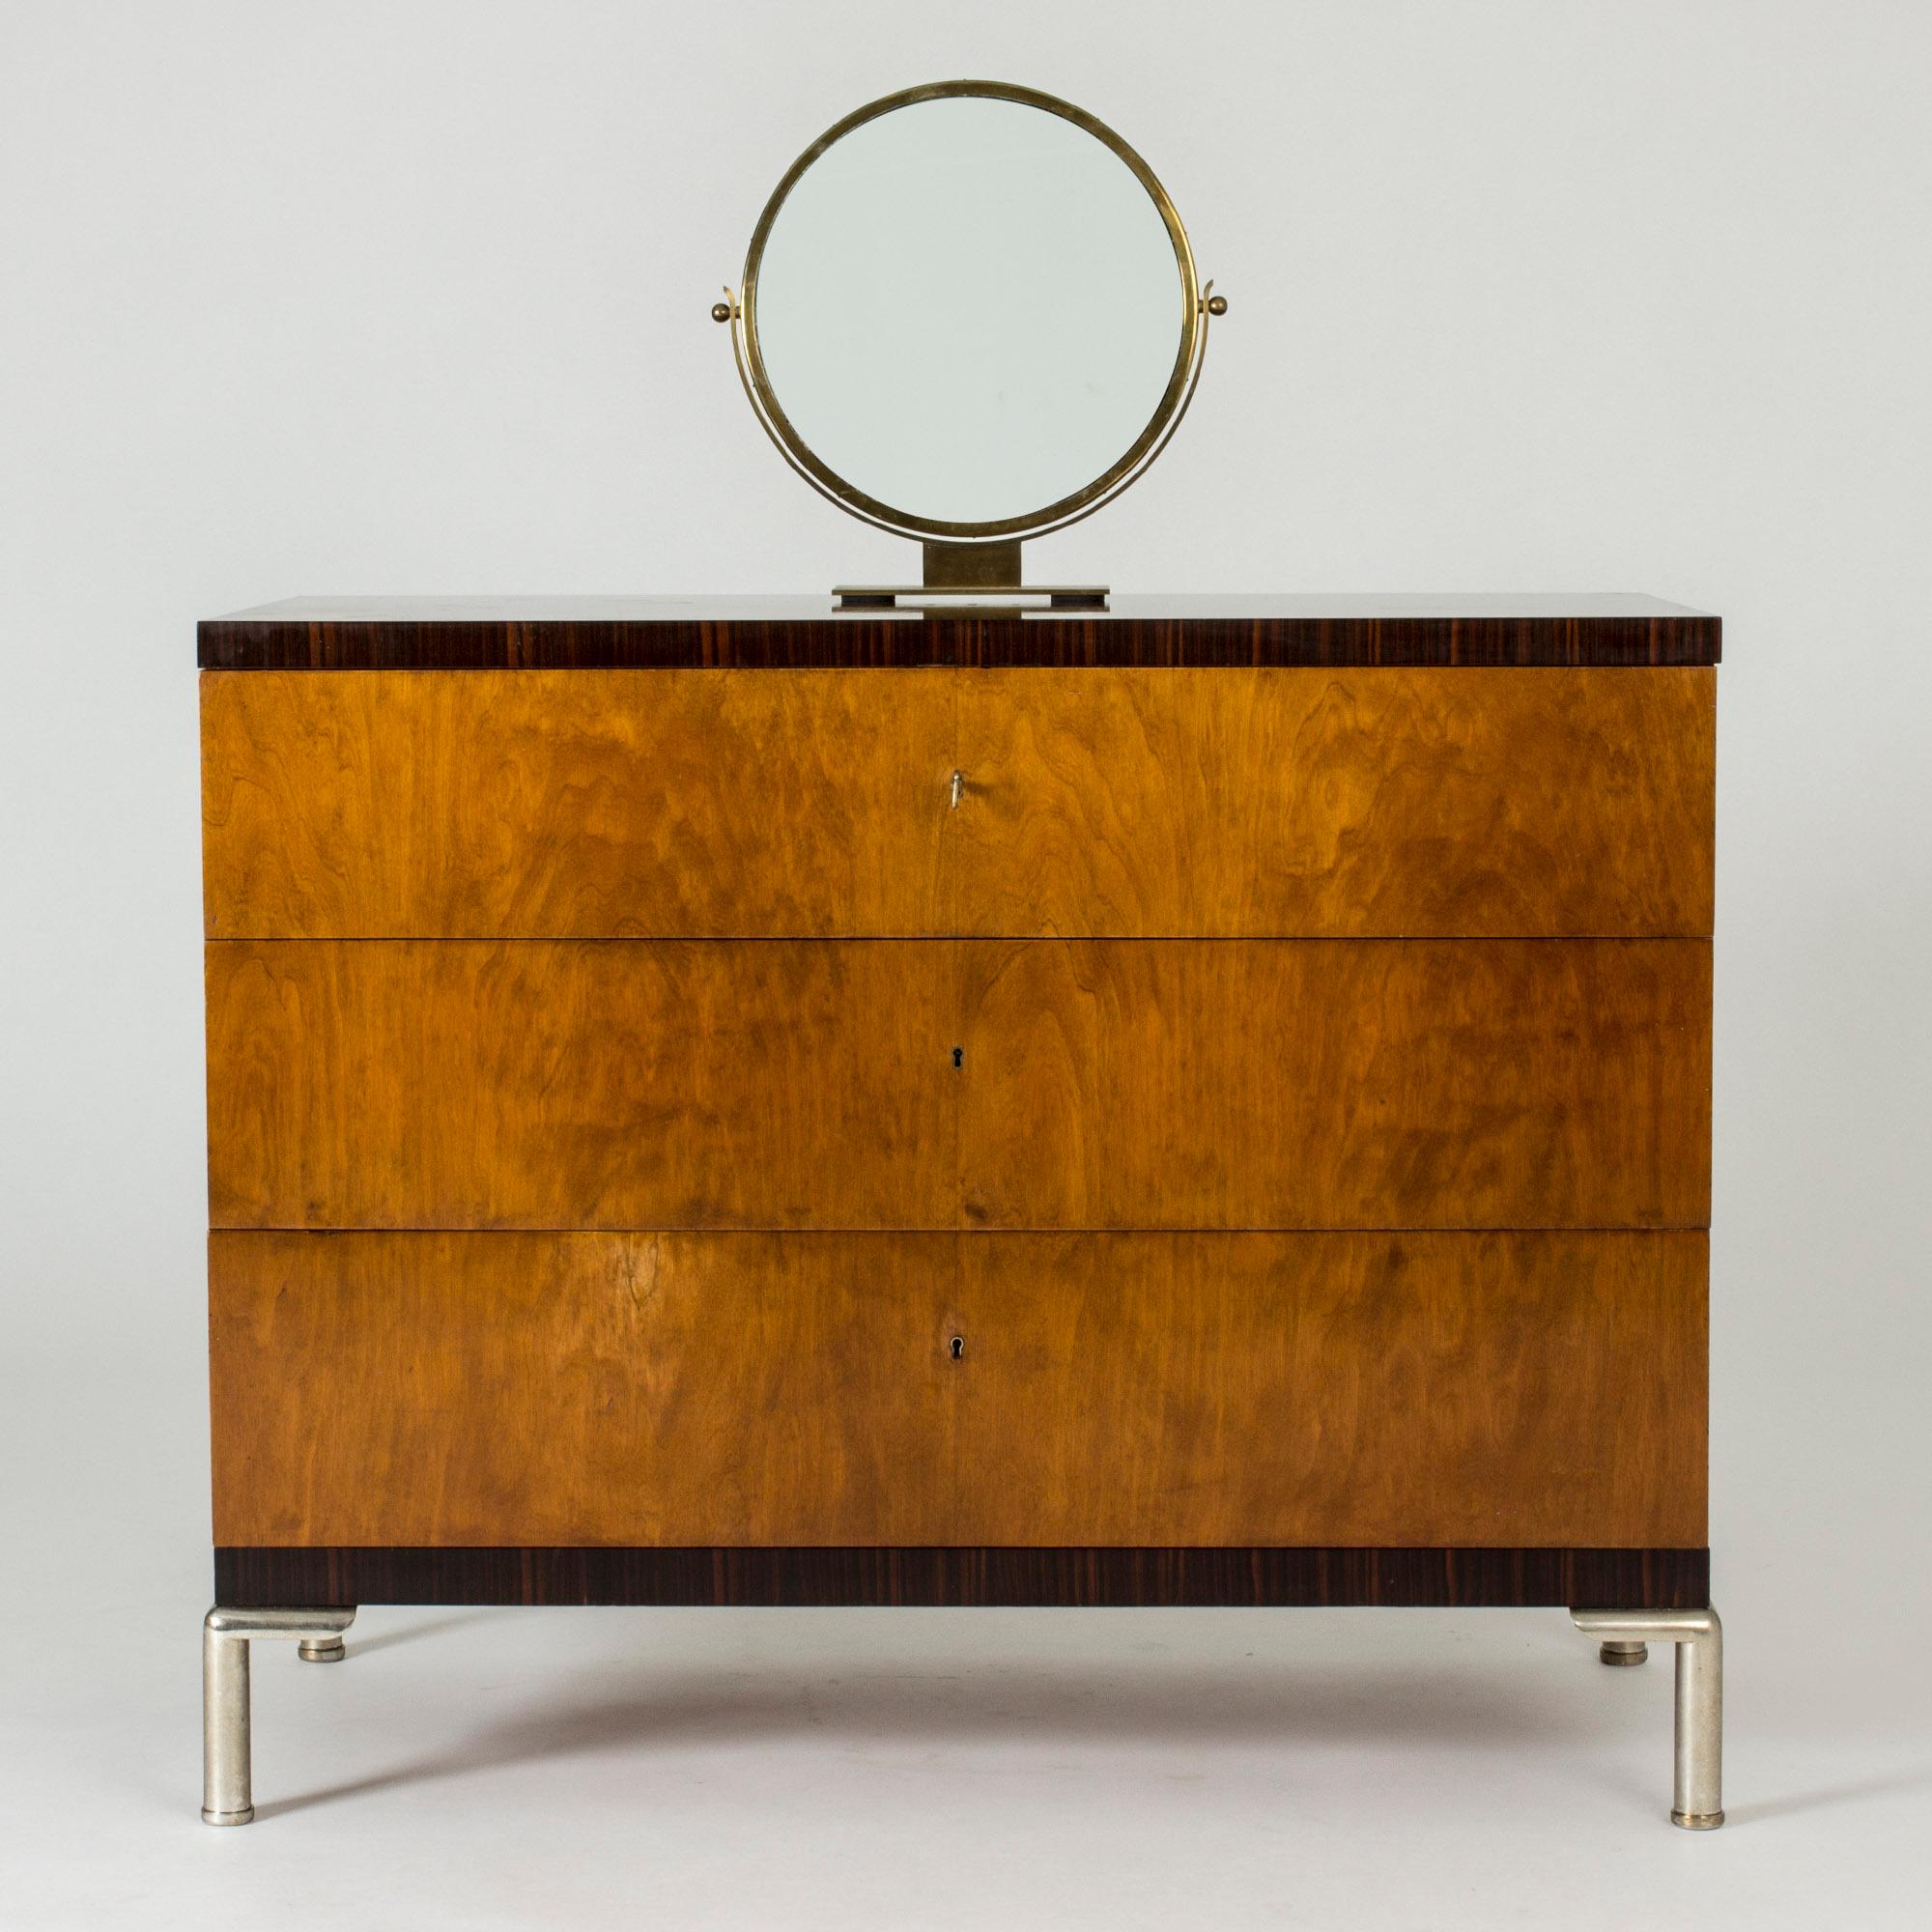 Brass Table Mirror by Ivar Ålenius-Björk 3